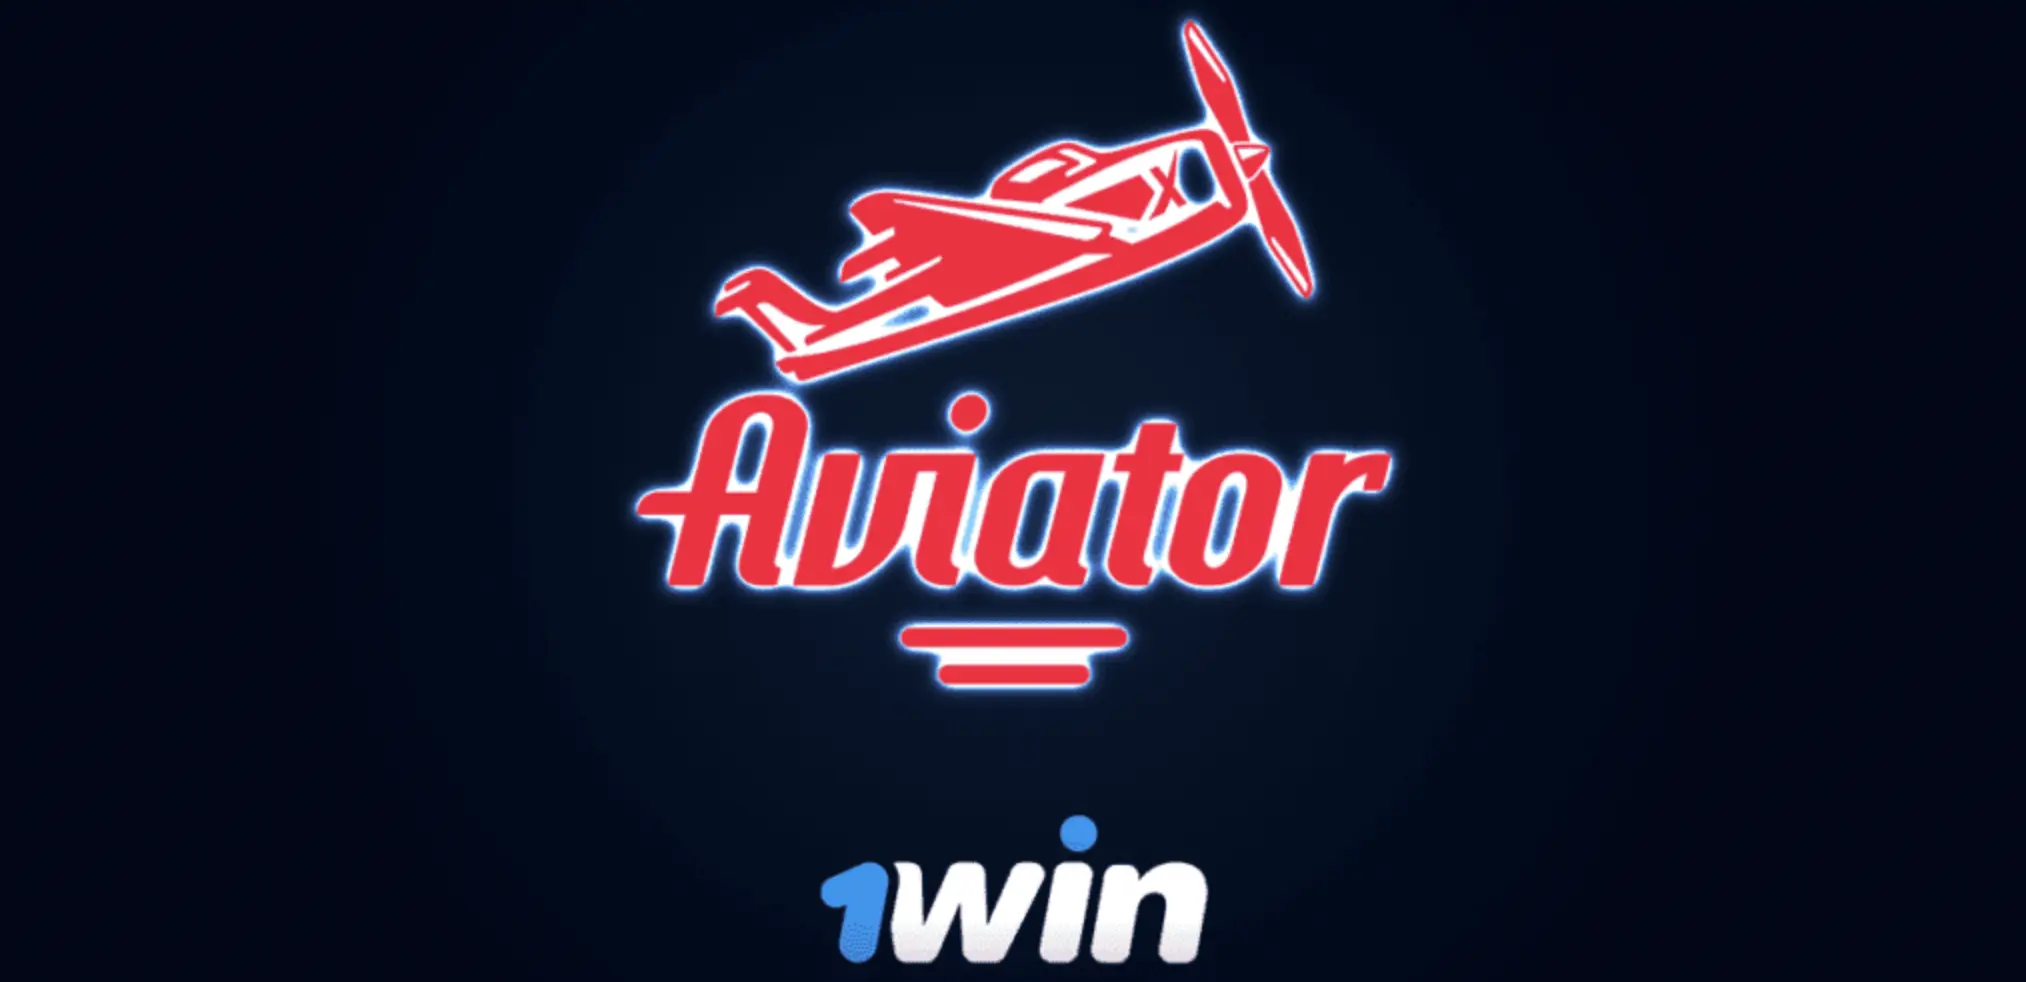 Aviator 1win вин. Aviator слот. Авиатор игра в казино. Игра Авиатор 1win. Авиатор казино логотип.